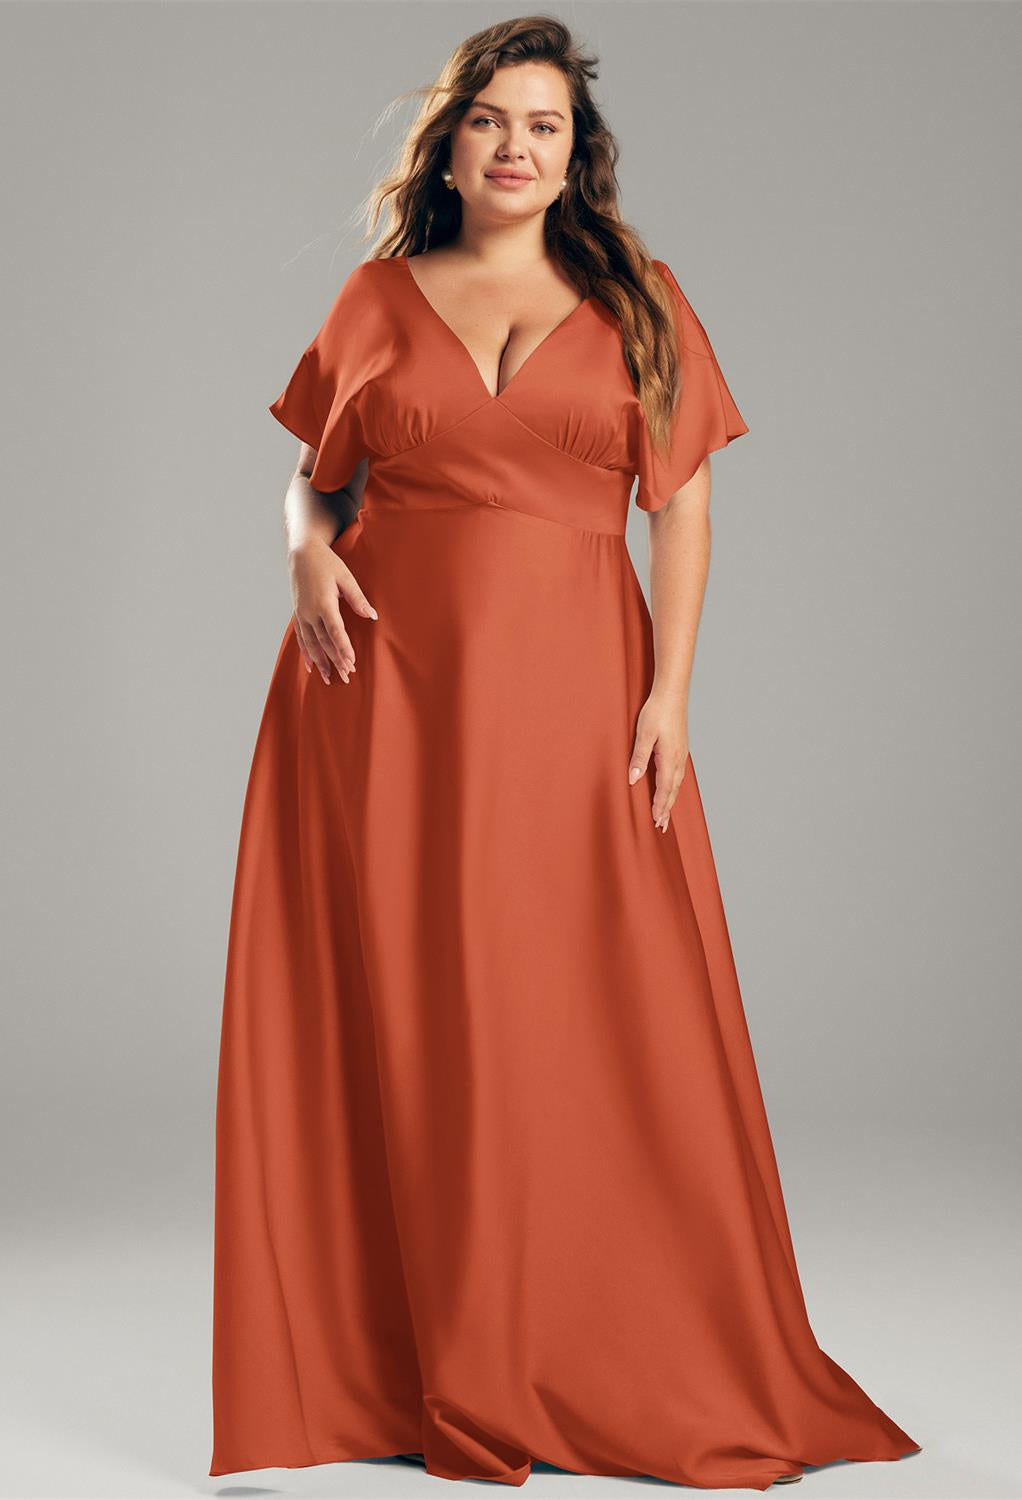 Nora - Satin Charmeuse Bridesmaid Dress